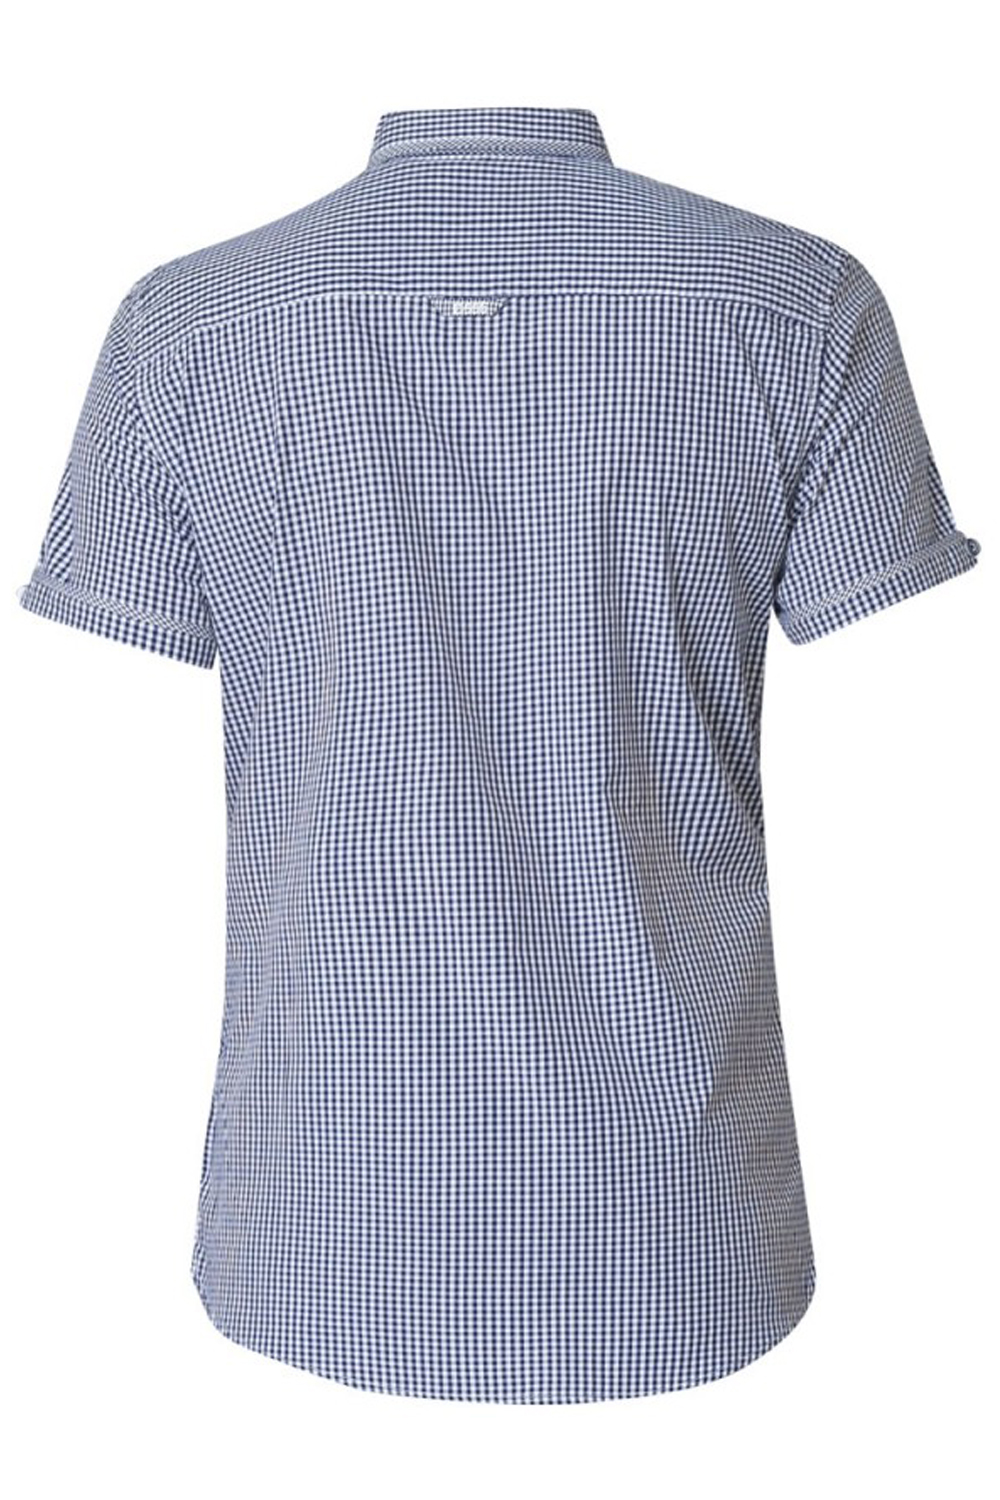 Duke D555 Mens Big Tall King Size Shirts Cotton Casual Summer Short Sleeved Tops | eBay